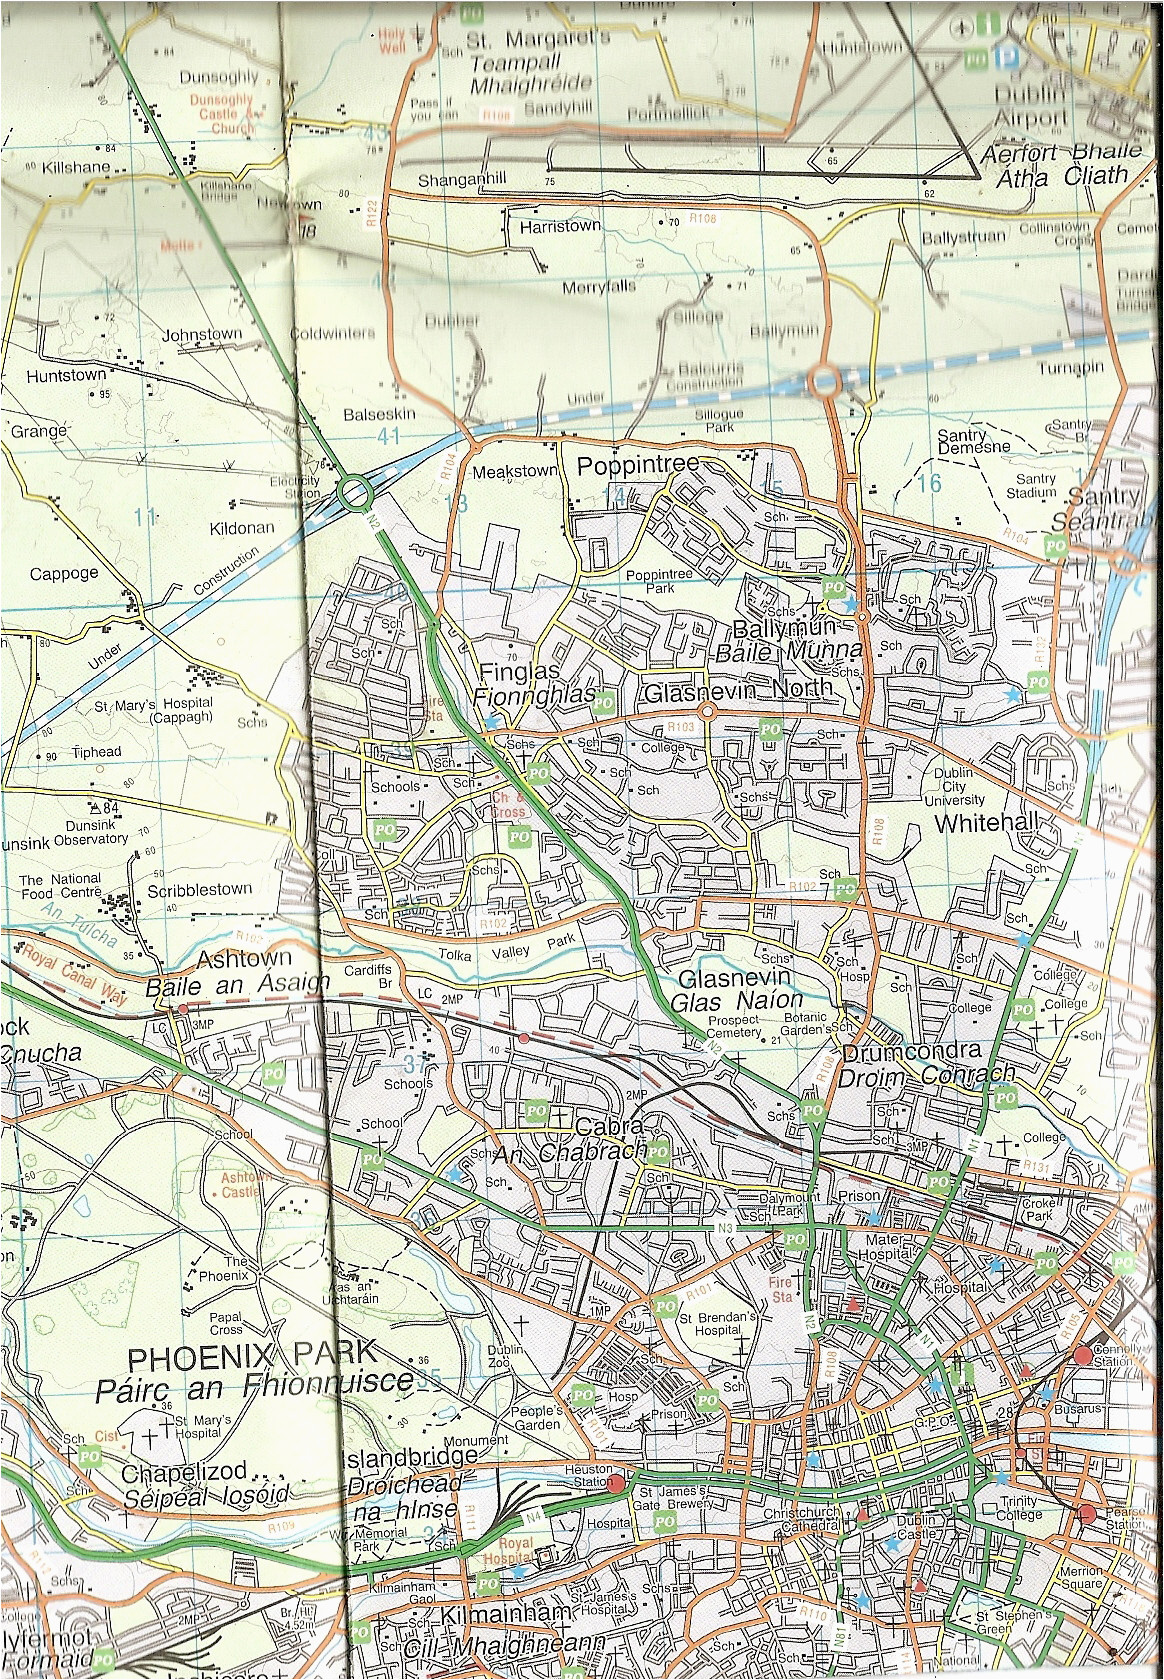 Ordnance Survey Maps Ireland Free Dublin Archives From Ireland Net